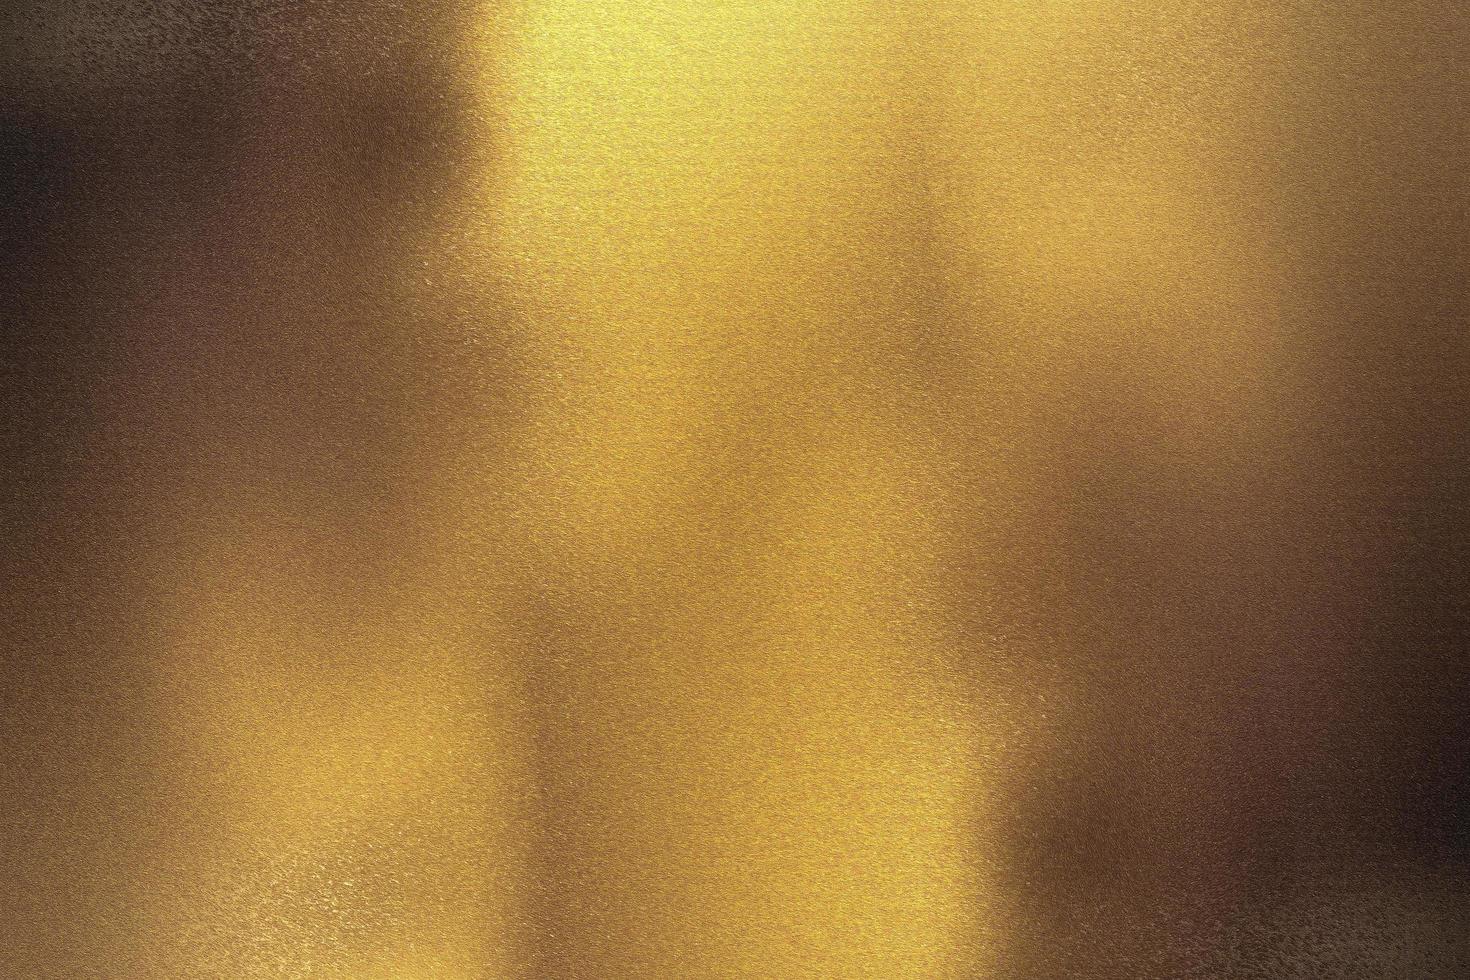 pared metálica de lámina de bronce cepillado con luz brillante, fondo de textura abstracta foto